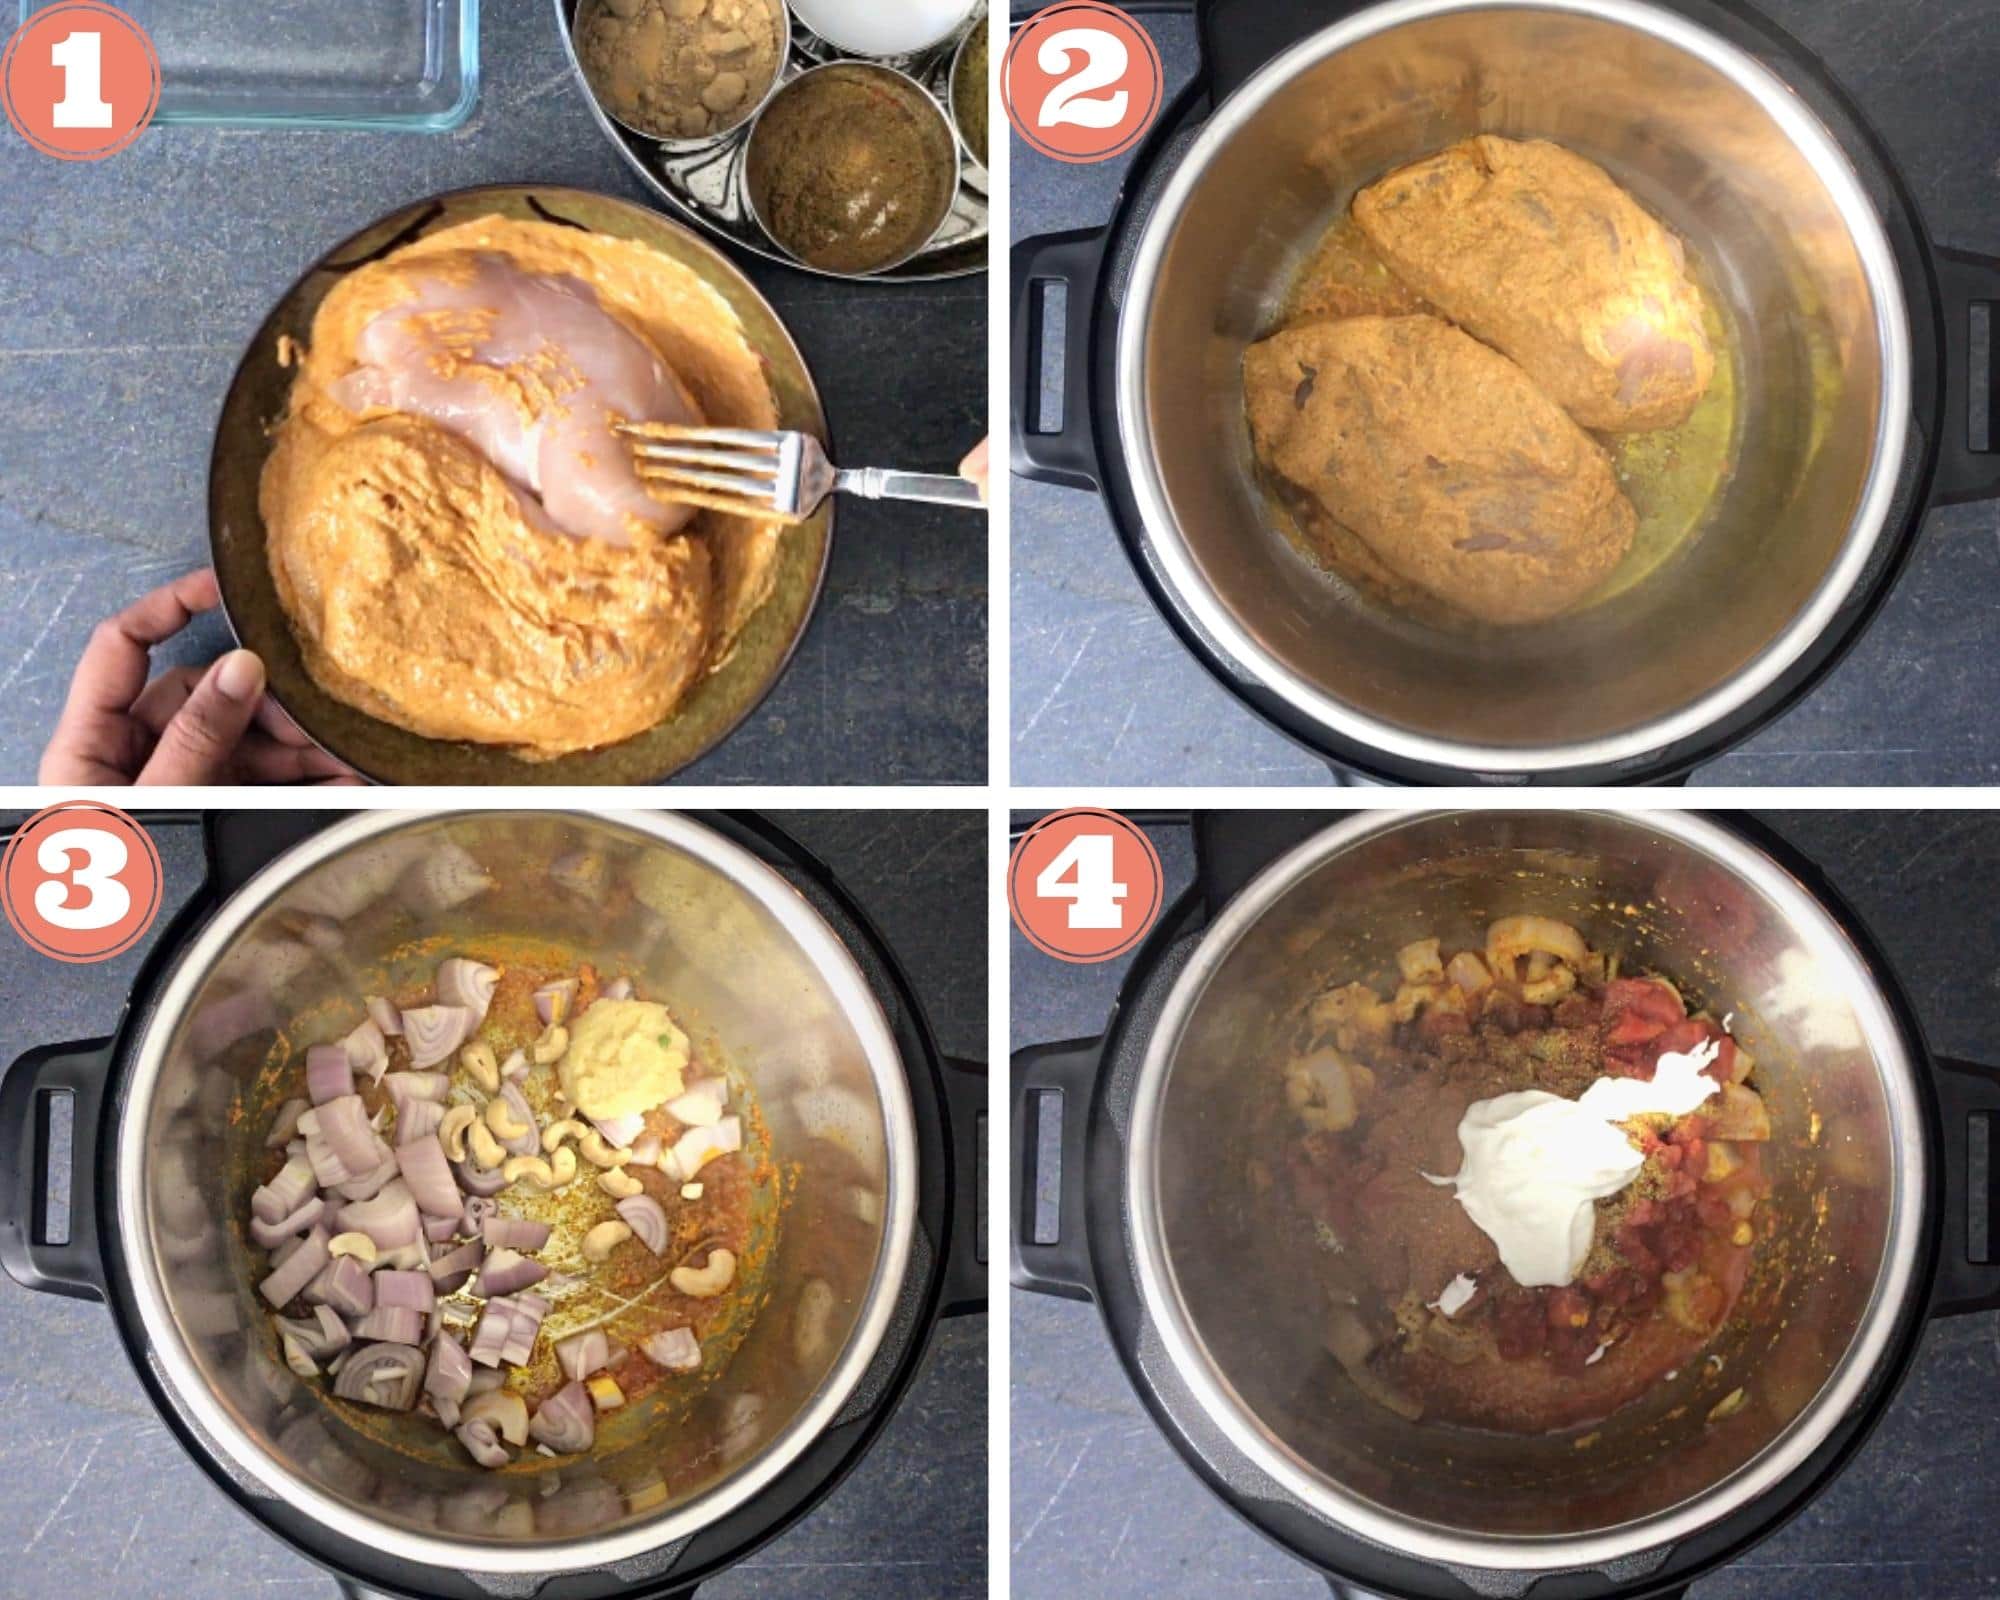 Image grid showing process of marinating, and cooking chicken tikka masala